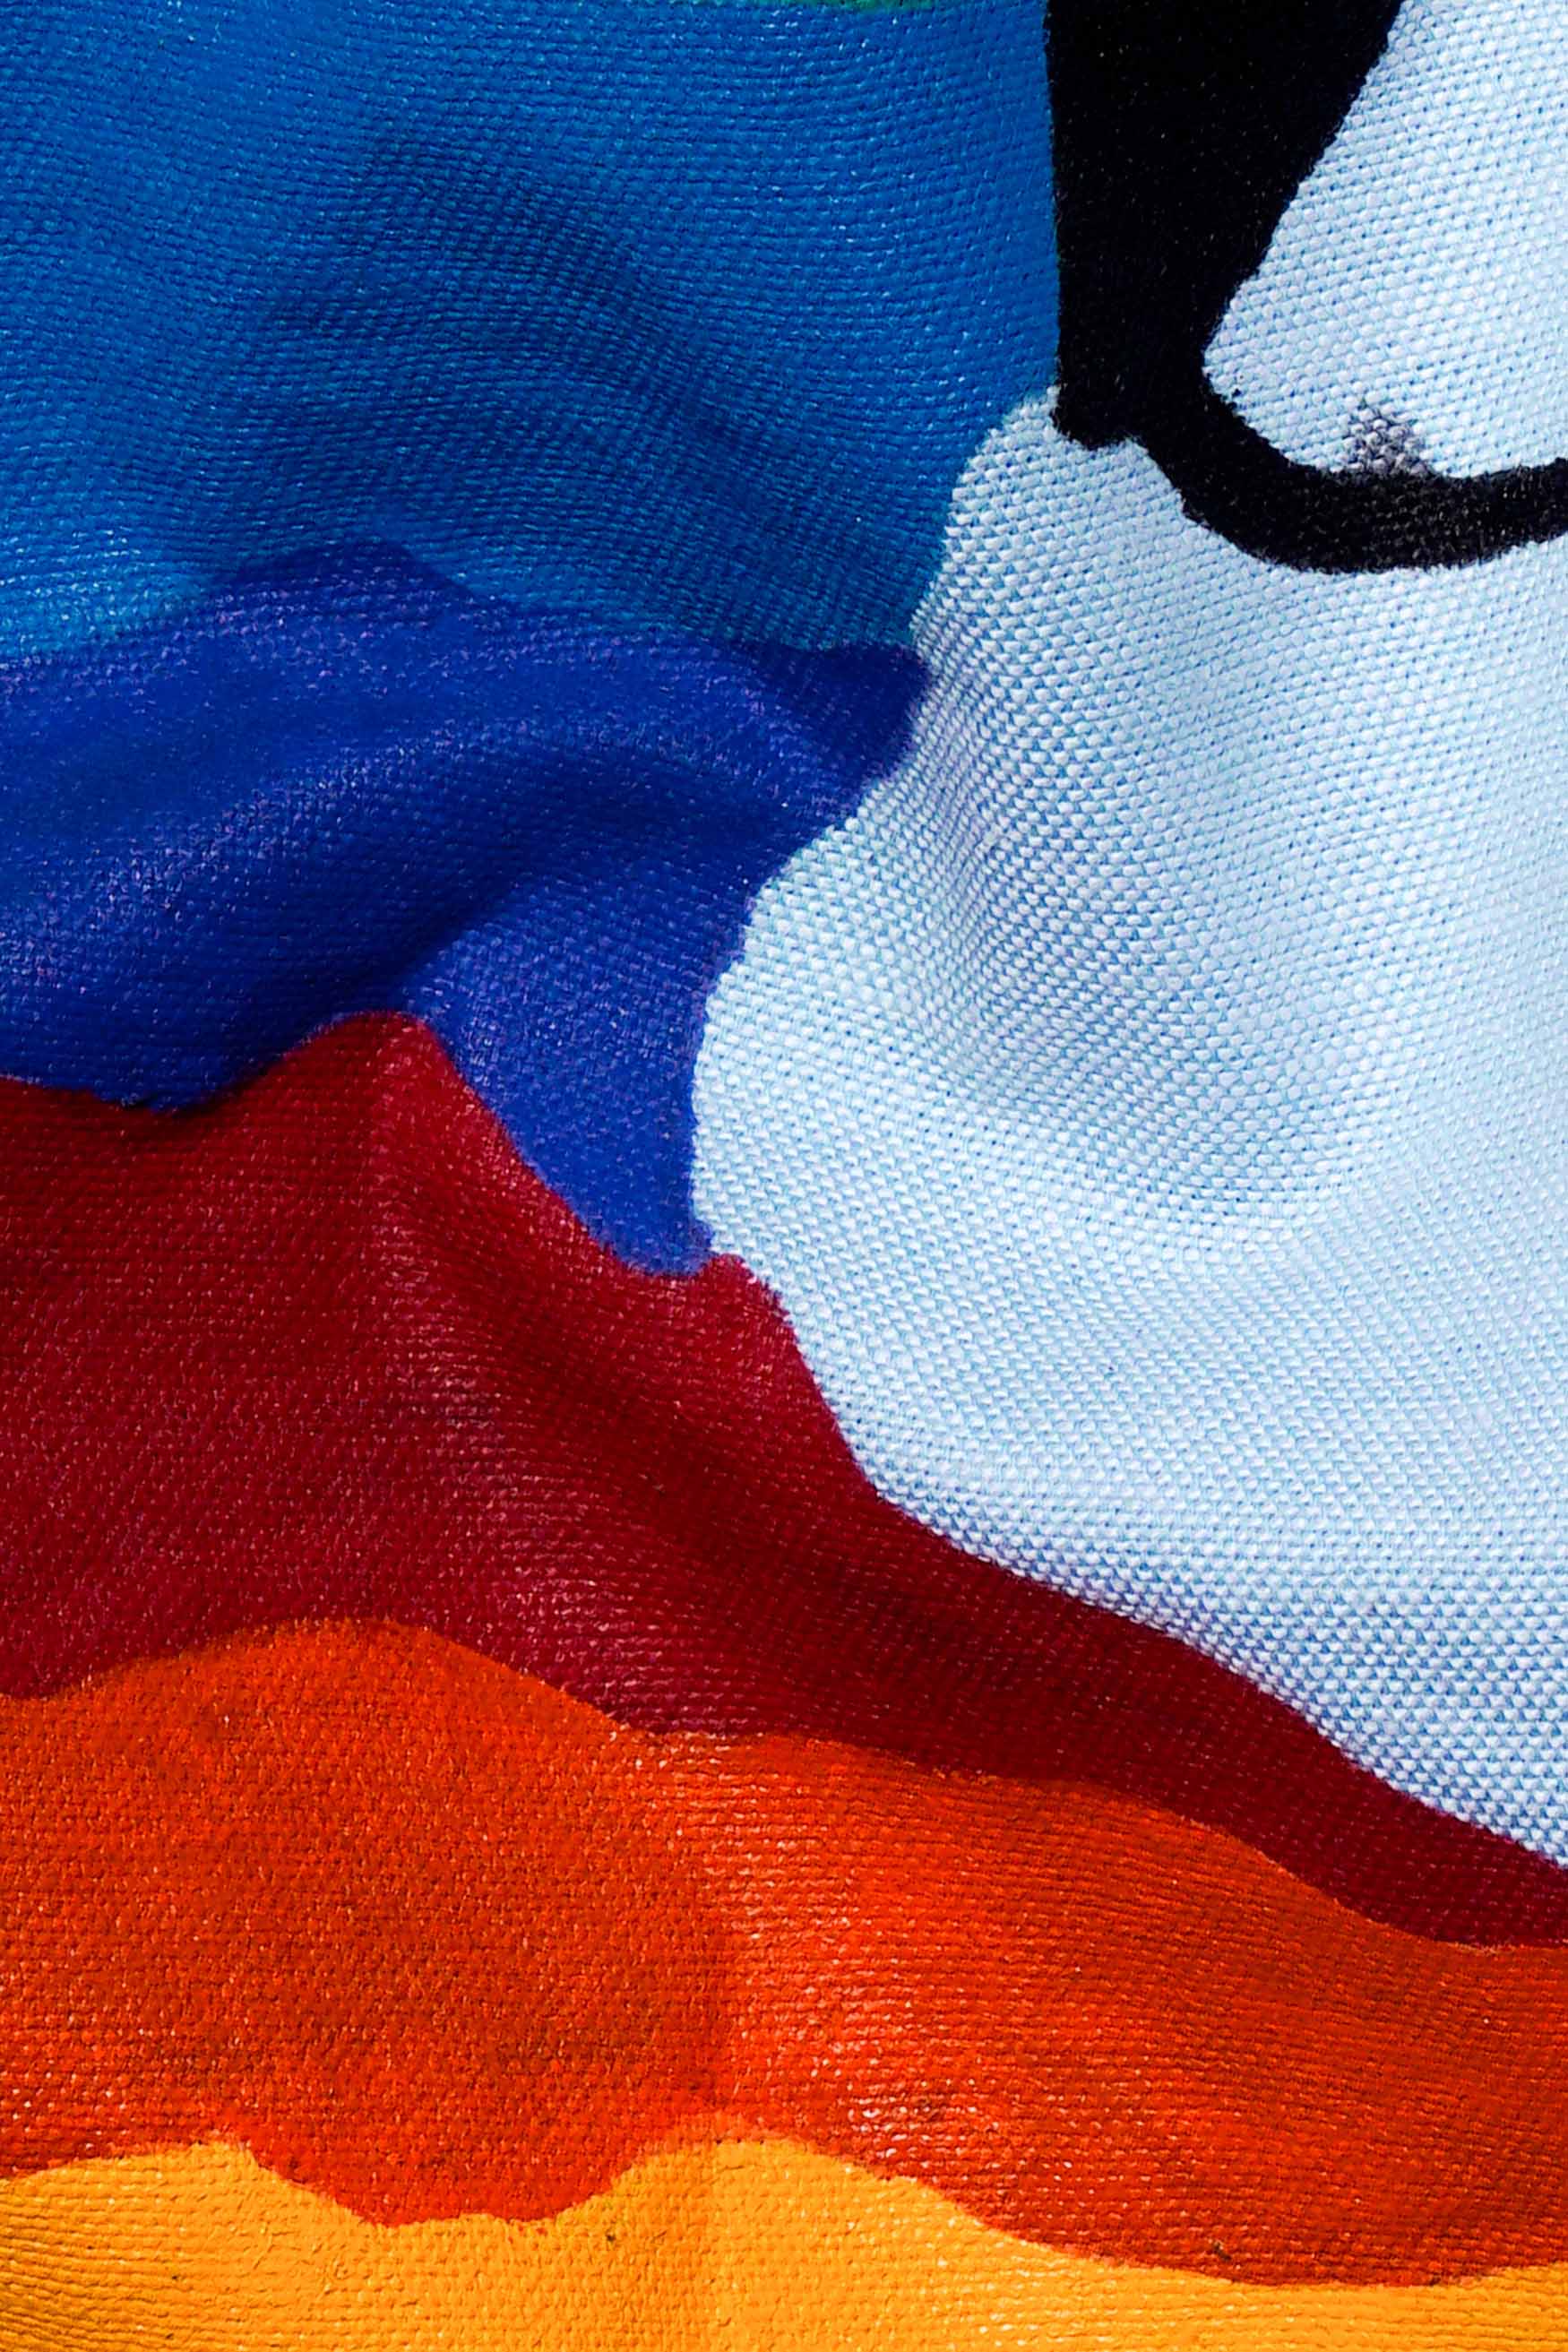 Celeste Blue Funky Multicolour Hand Painted Royal Oxford Designer Shirt 7455-BD-ART-38, 7455-BD-ART-H-38, 7455-BD-ART-39, 7455-BD-ART-H-39, 7455-BD-ART-40, 7455-BD-ART-H-40, 7455-BD-ART-42, 7455-BD-ART-H-42, 7455-BD-ART-44, 7455-BD-ART-H-44, 7455-BD-ART-46, 7455-BD-ART-H-46, 7455-BD-ART-48, 7455-BD-ART-H-48, 7455-BD-ART-50, 7455-BD-ART-H-50, 7455-BD-ART-52, 7455-BD-ART-H-52